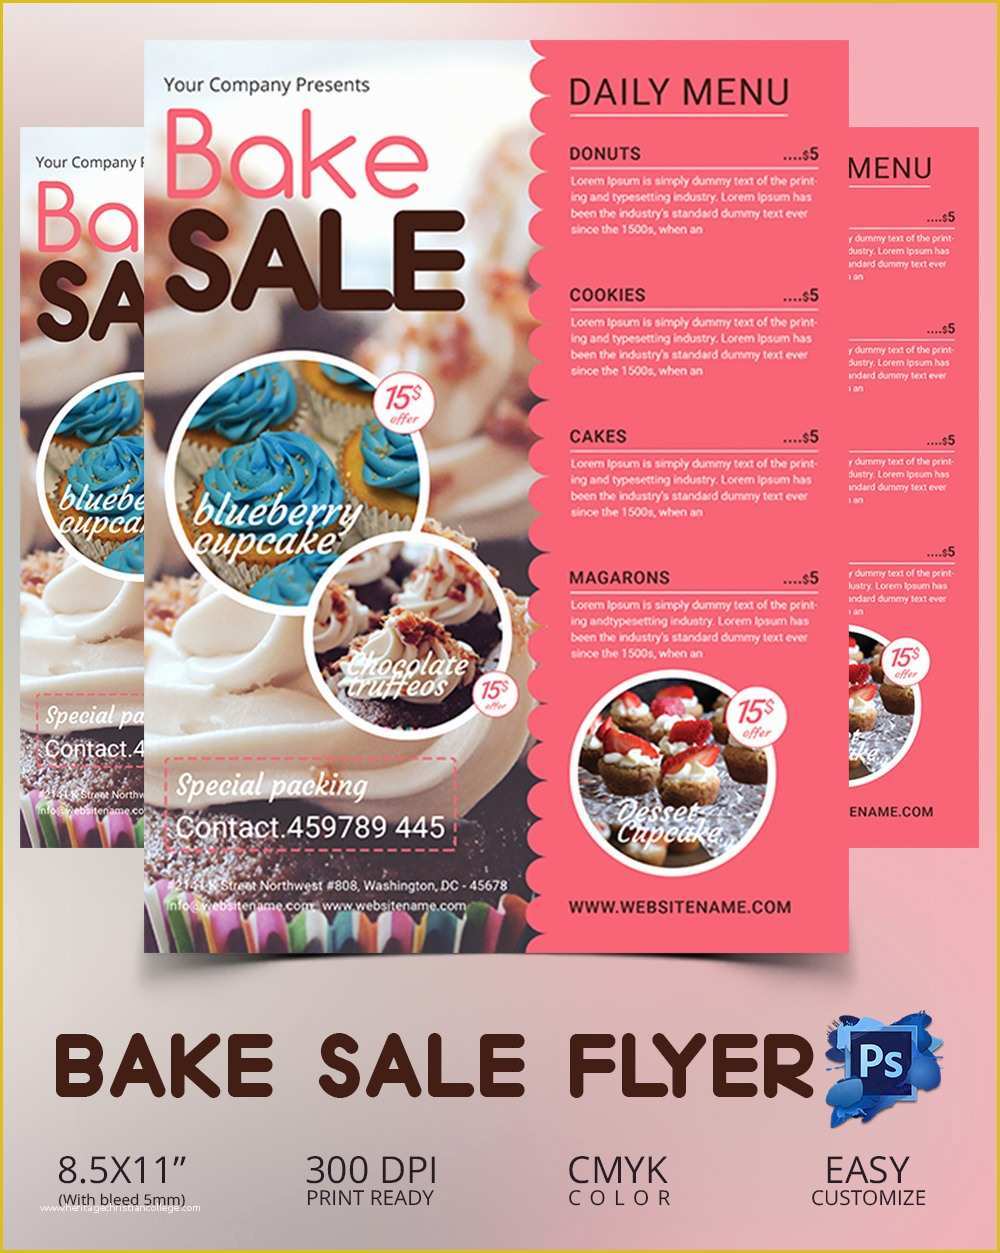 Bake Sale Flyer Template Free Of Design Templates Flyer Bake Sale Template Business